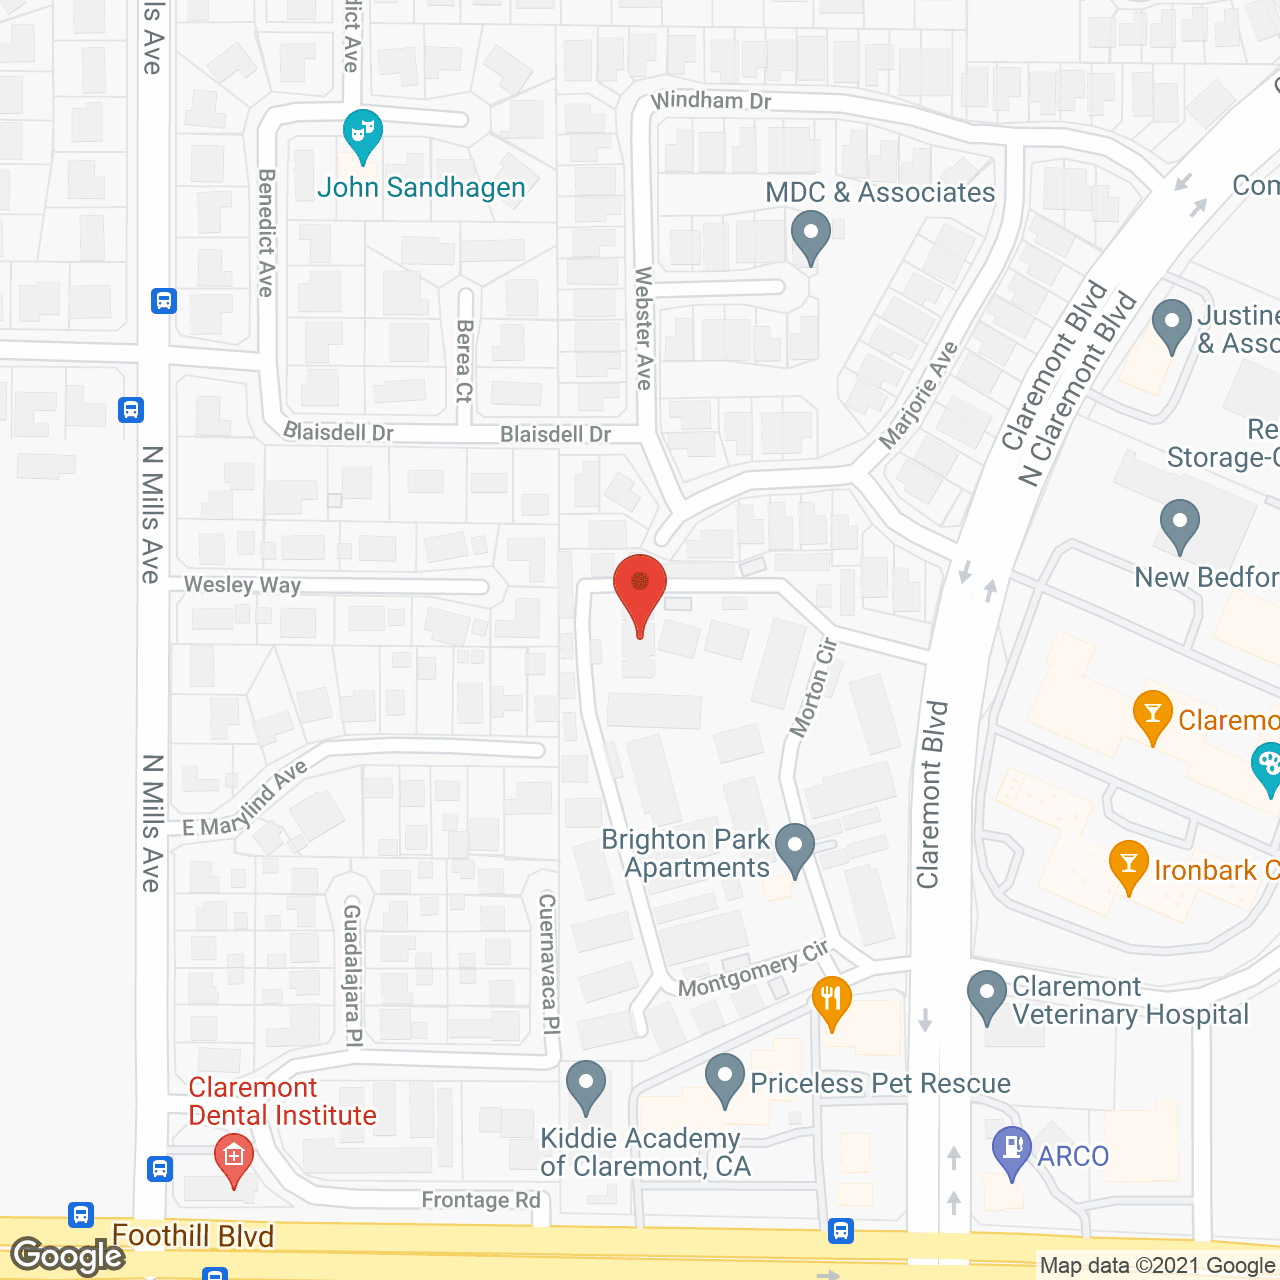 Brighton Park Apartments in google map